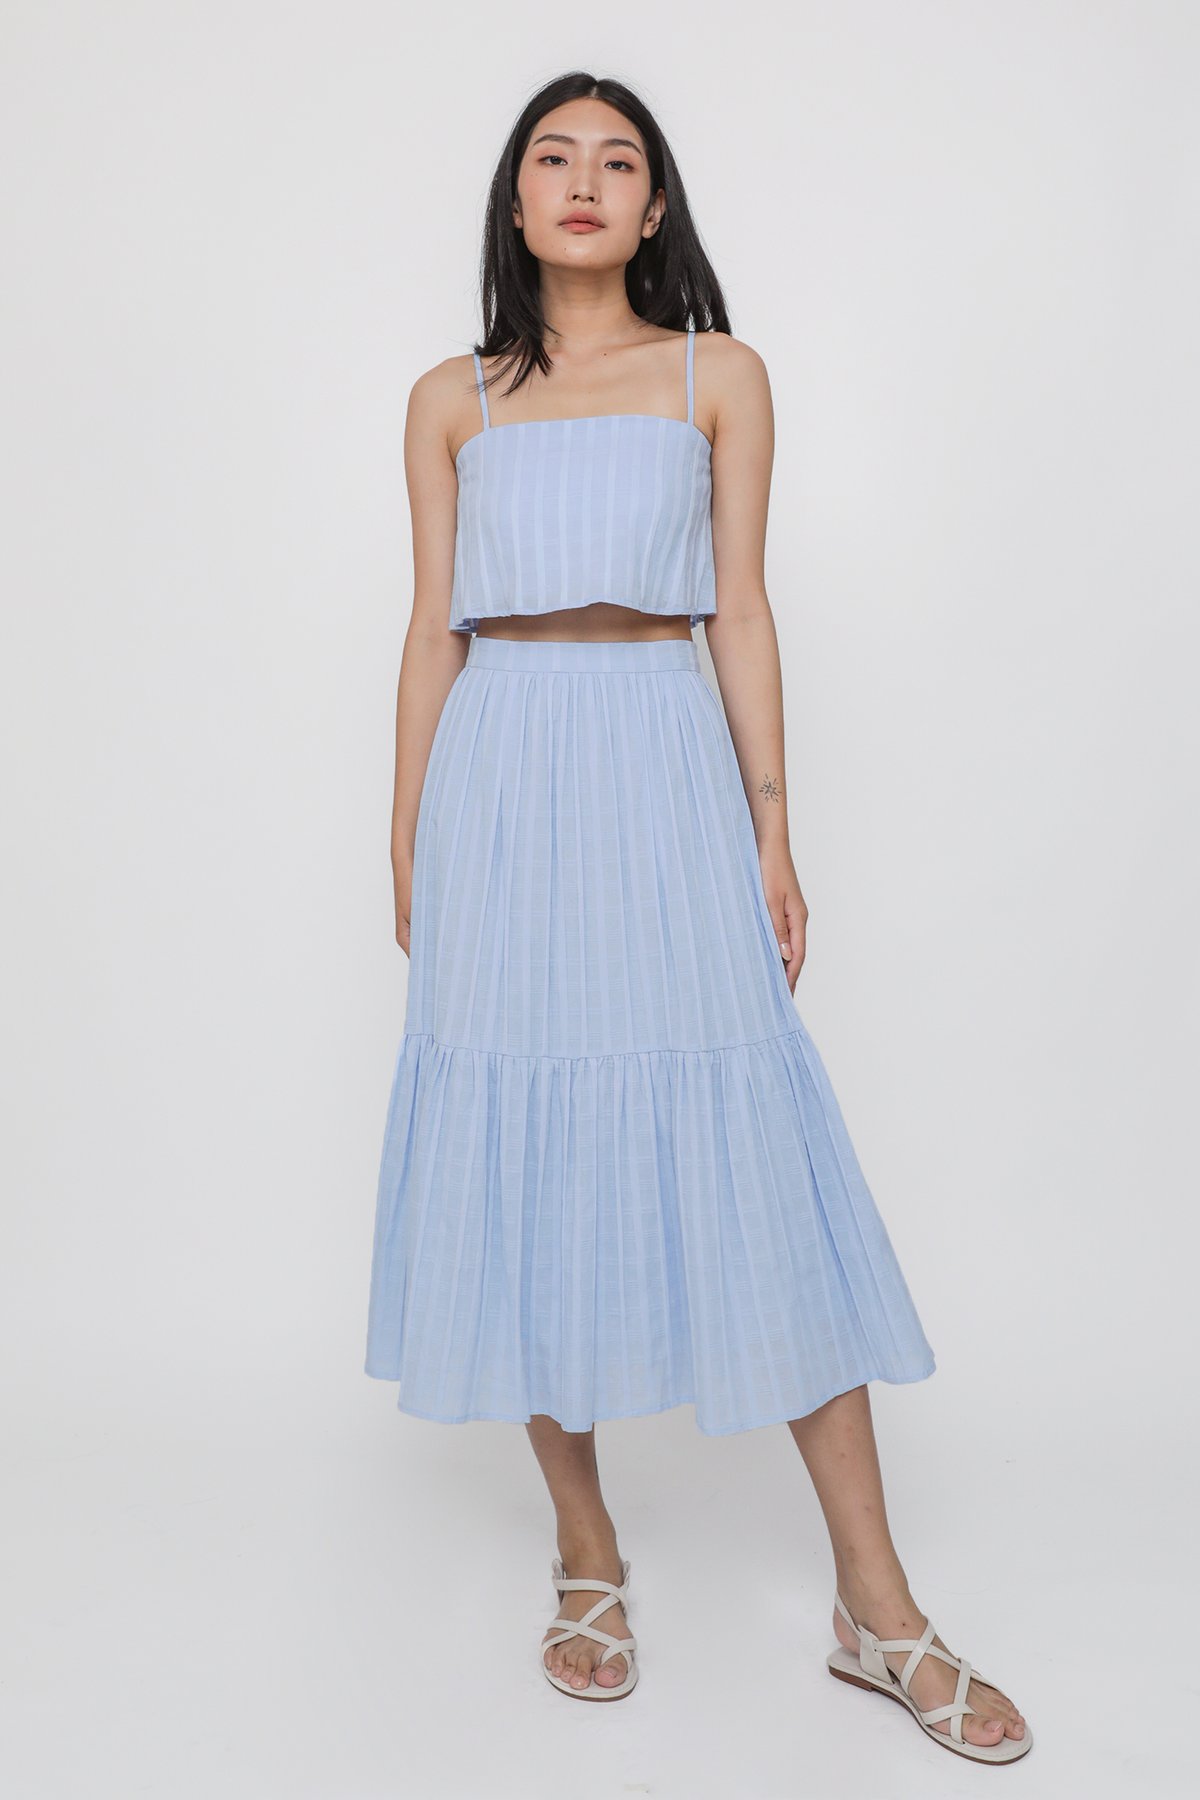 Buy Jemima A-line Camisole Dress @ Love, Bonito Singapore